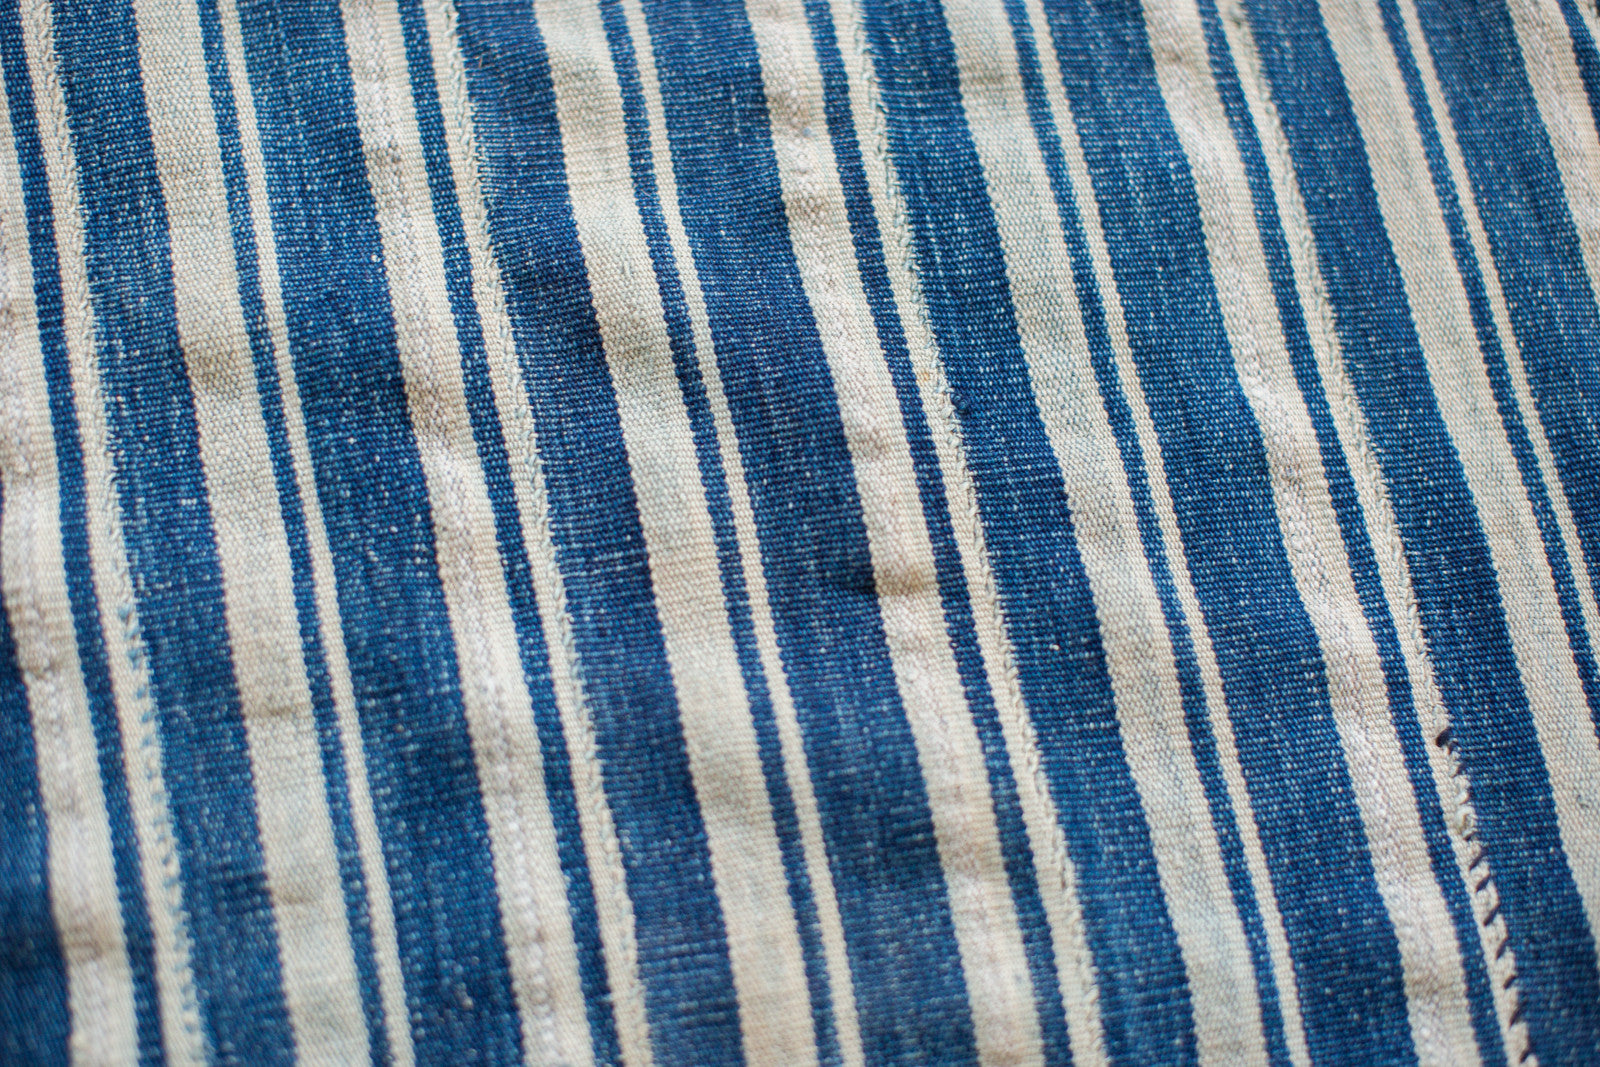 2.5x4 Indigo Blue Striped Textile